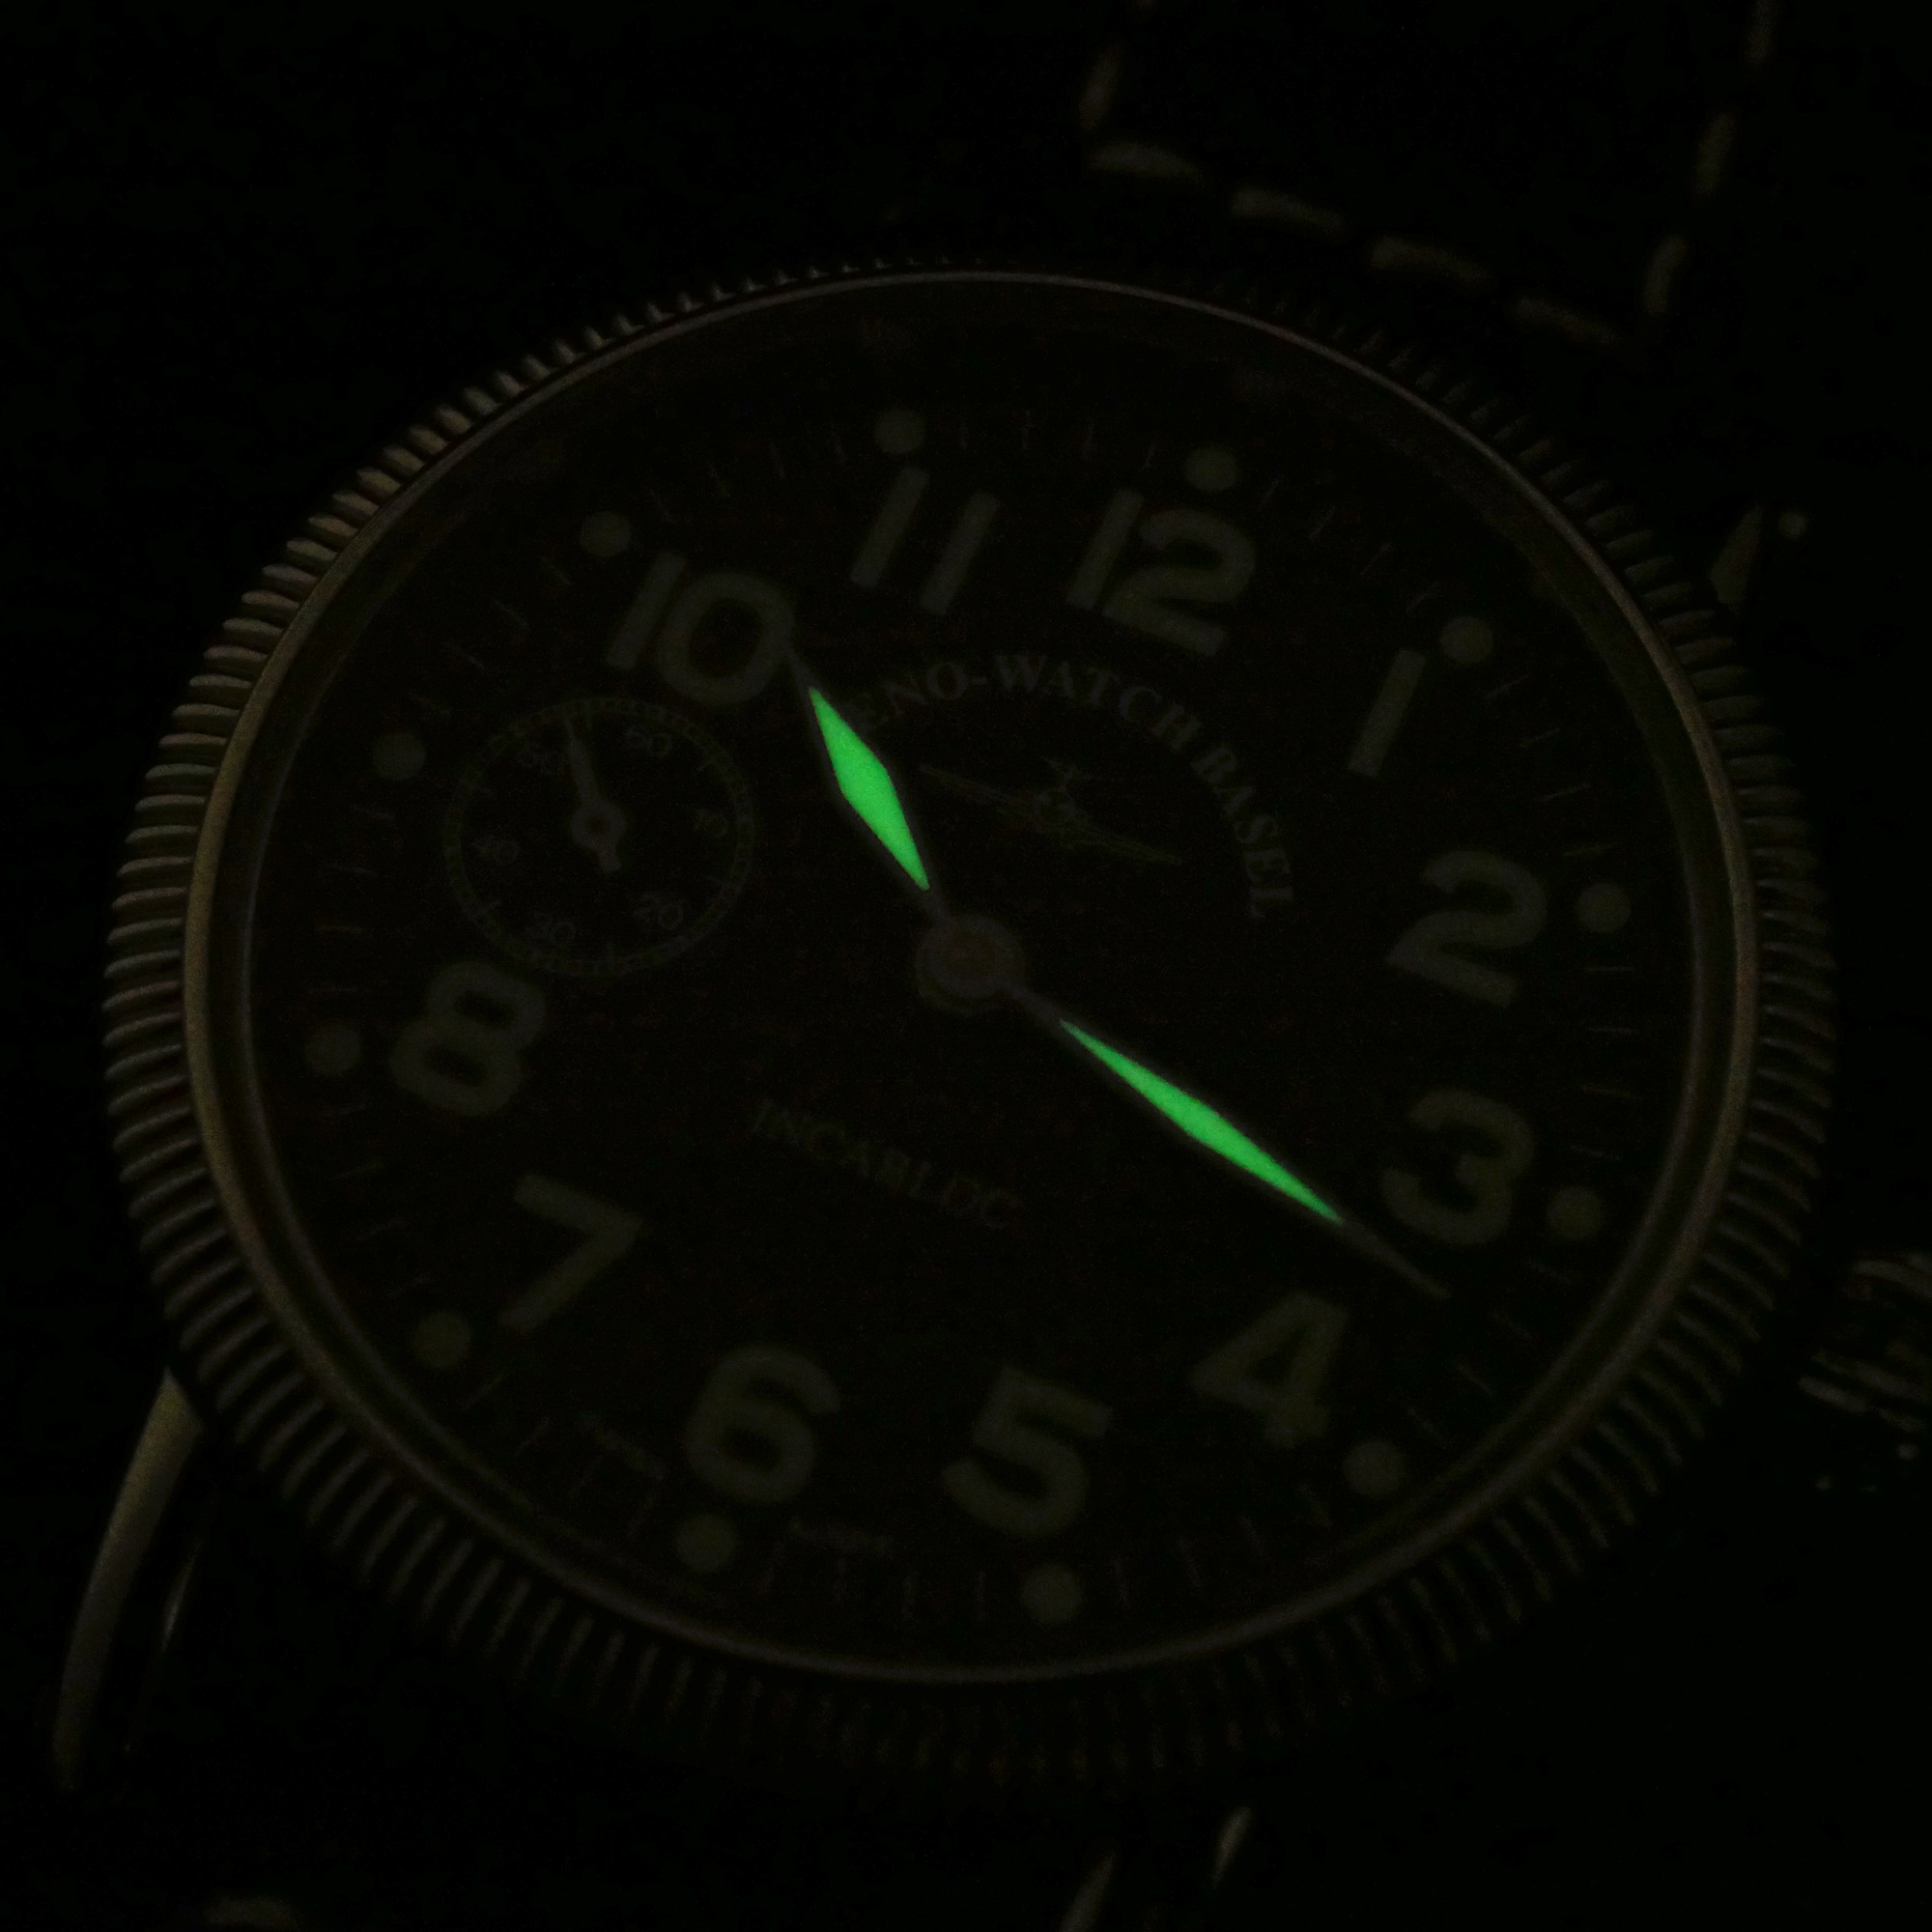 Zeno-Watch Basel Nostalgia Winder Swiss Men's Watch 44mm 3ATM 98078-9-a1 - Click Image to Close